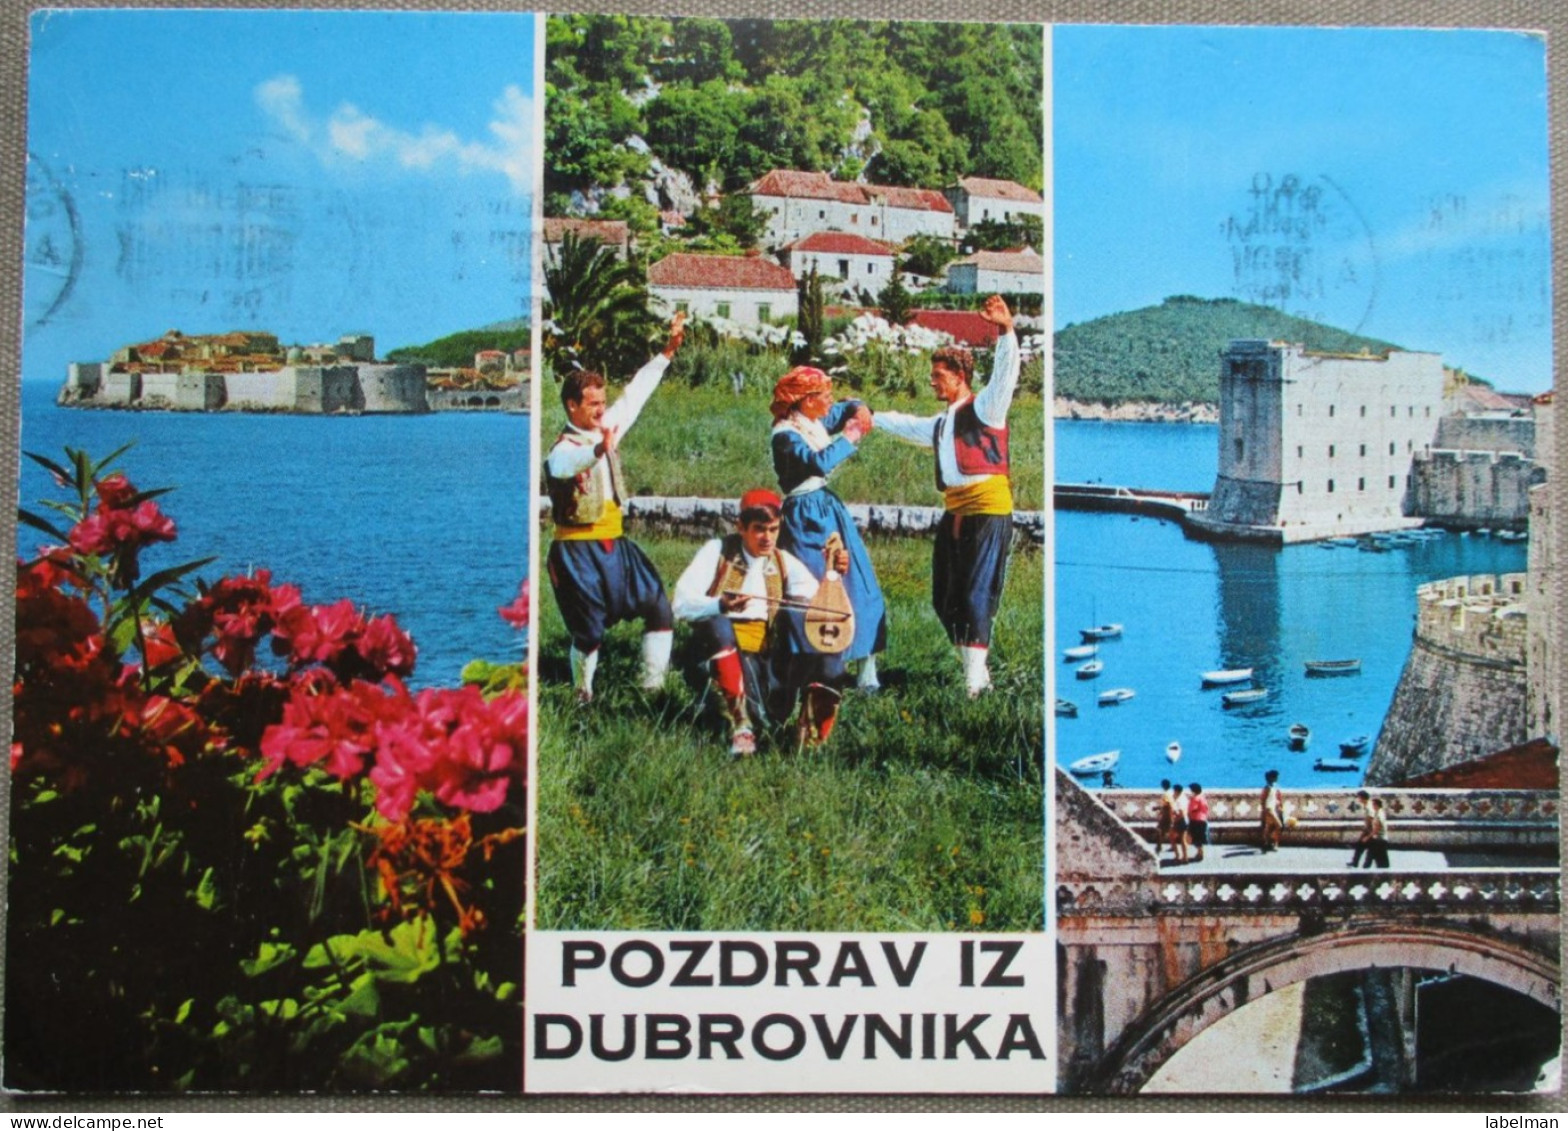 CROATIA DOVROBNIK JUGOSLAVIA POSTCARD CARTOLINA ANSICHTSKARTE CARTE POSTALE POSTKARTE CARD KARTE - Etiketten Van Hotels